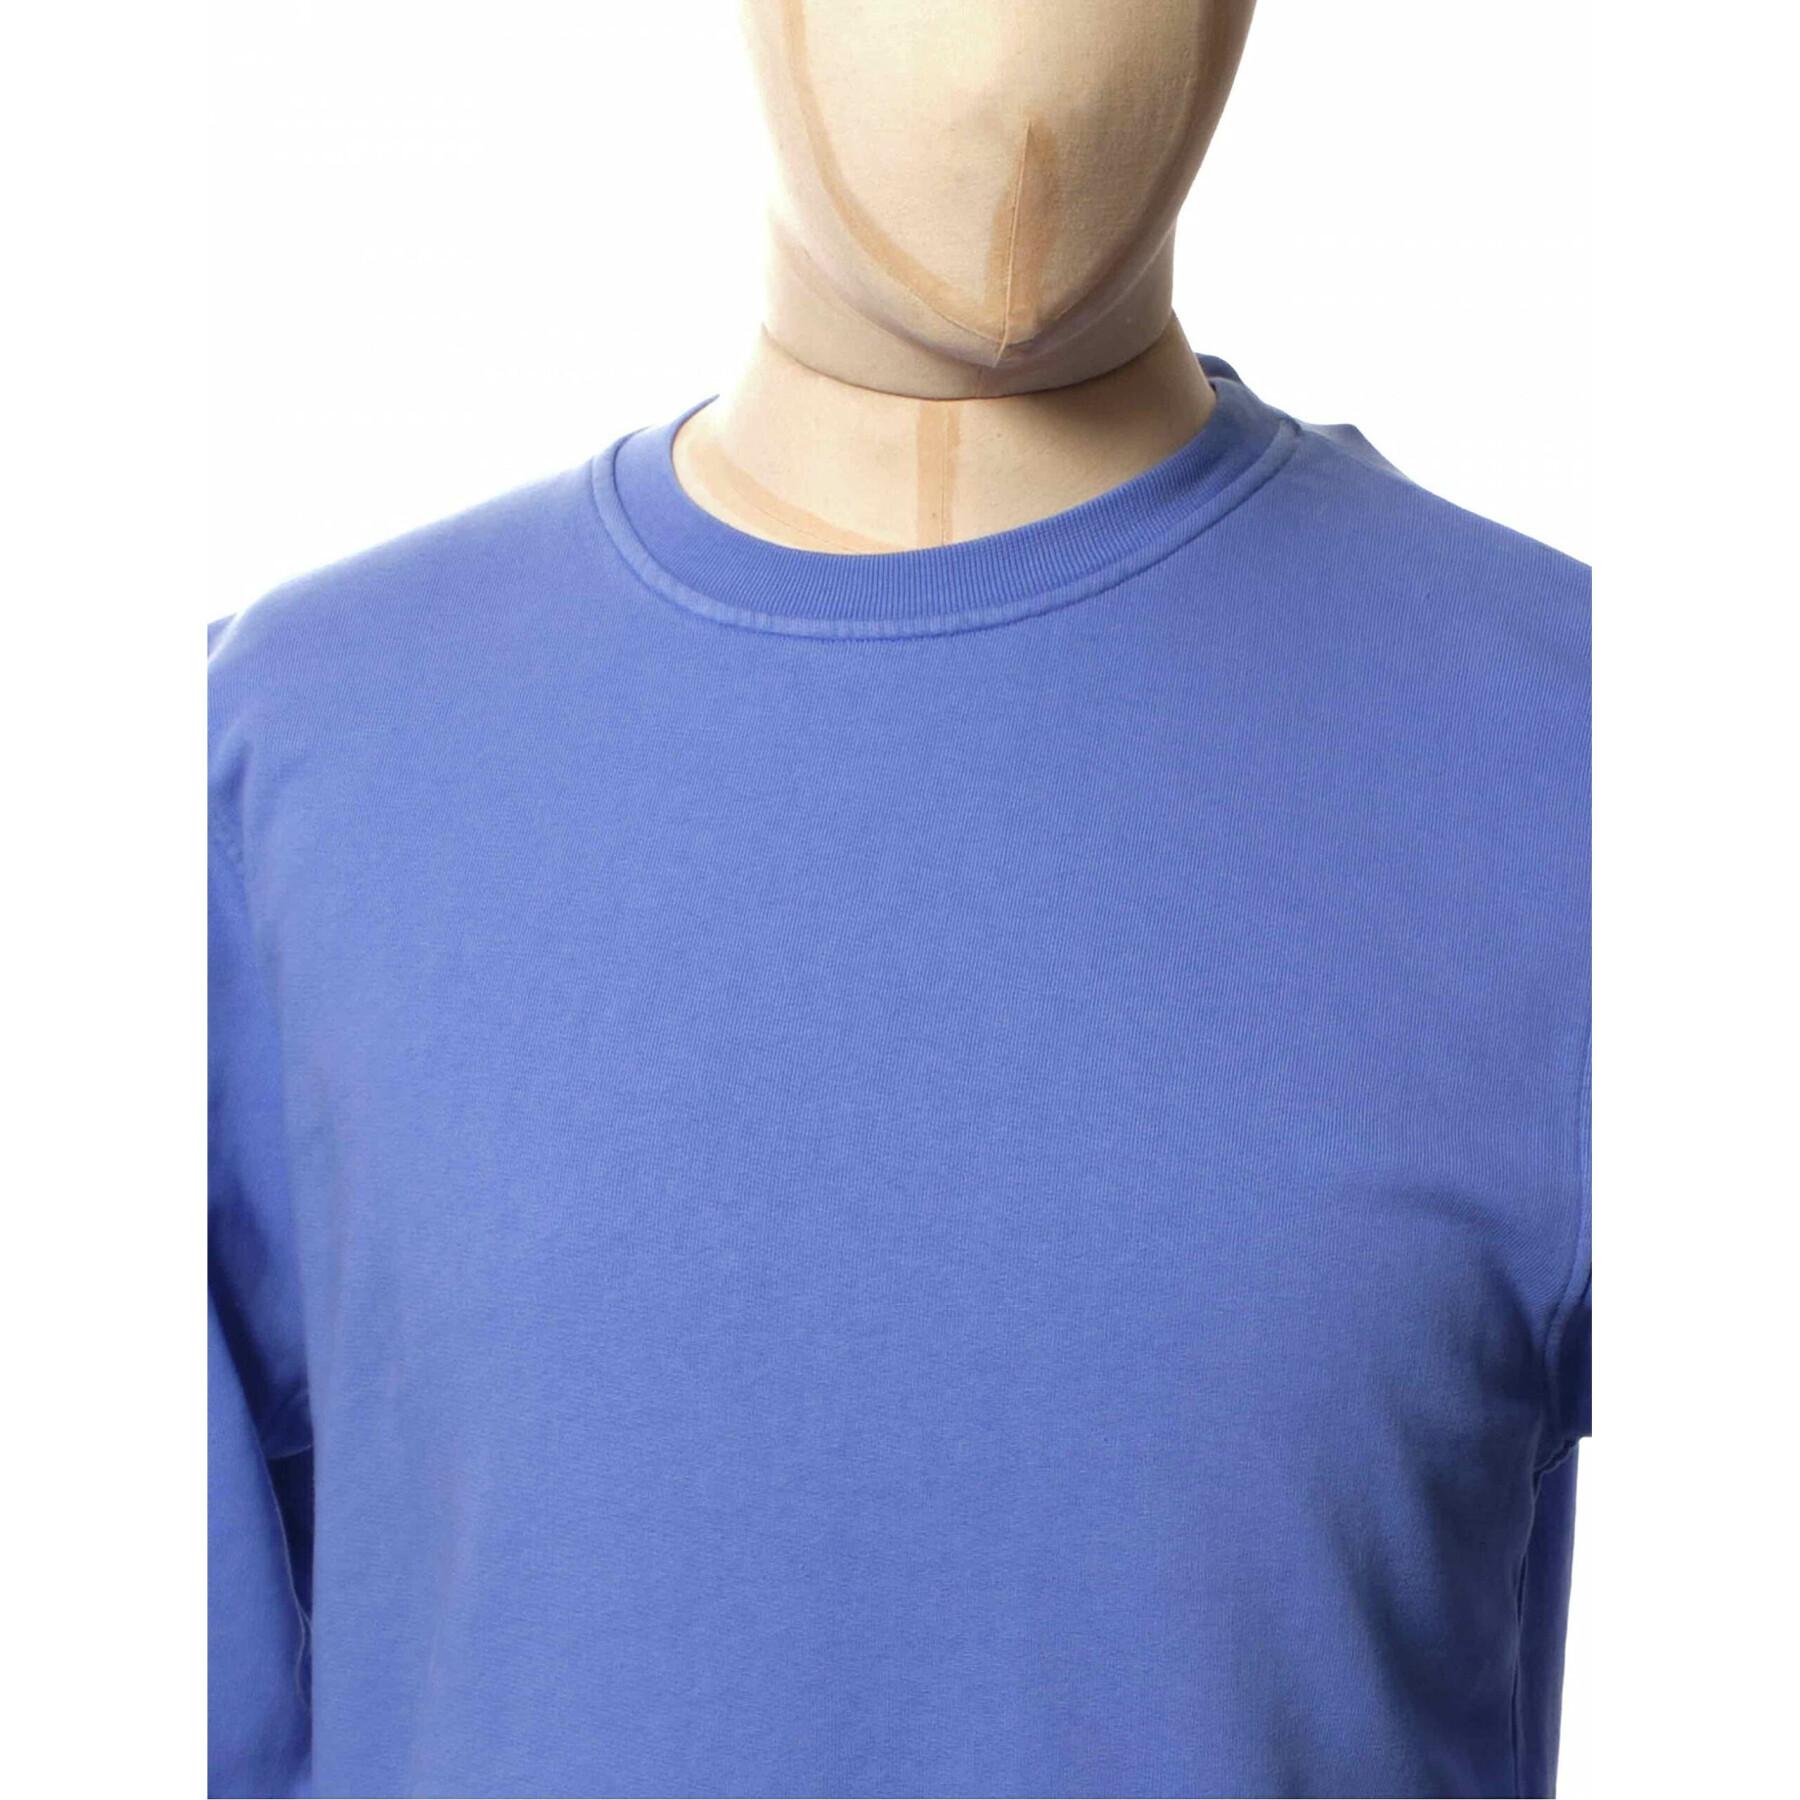 Sweatshirt round neck Colorful Standard Classic Organic sky blue